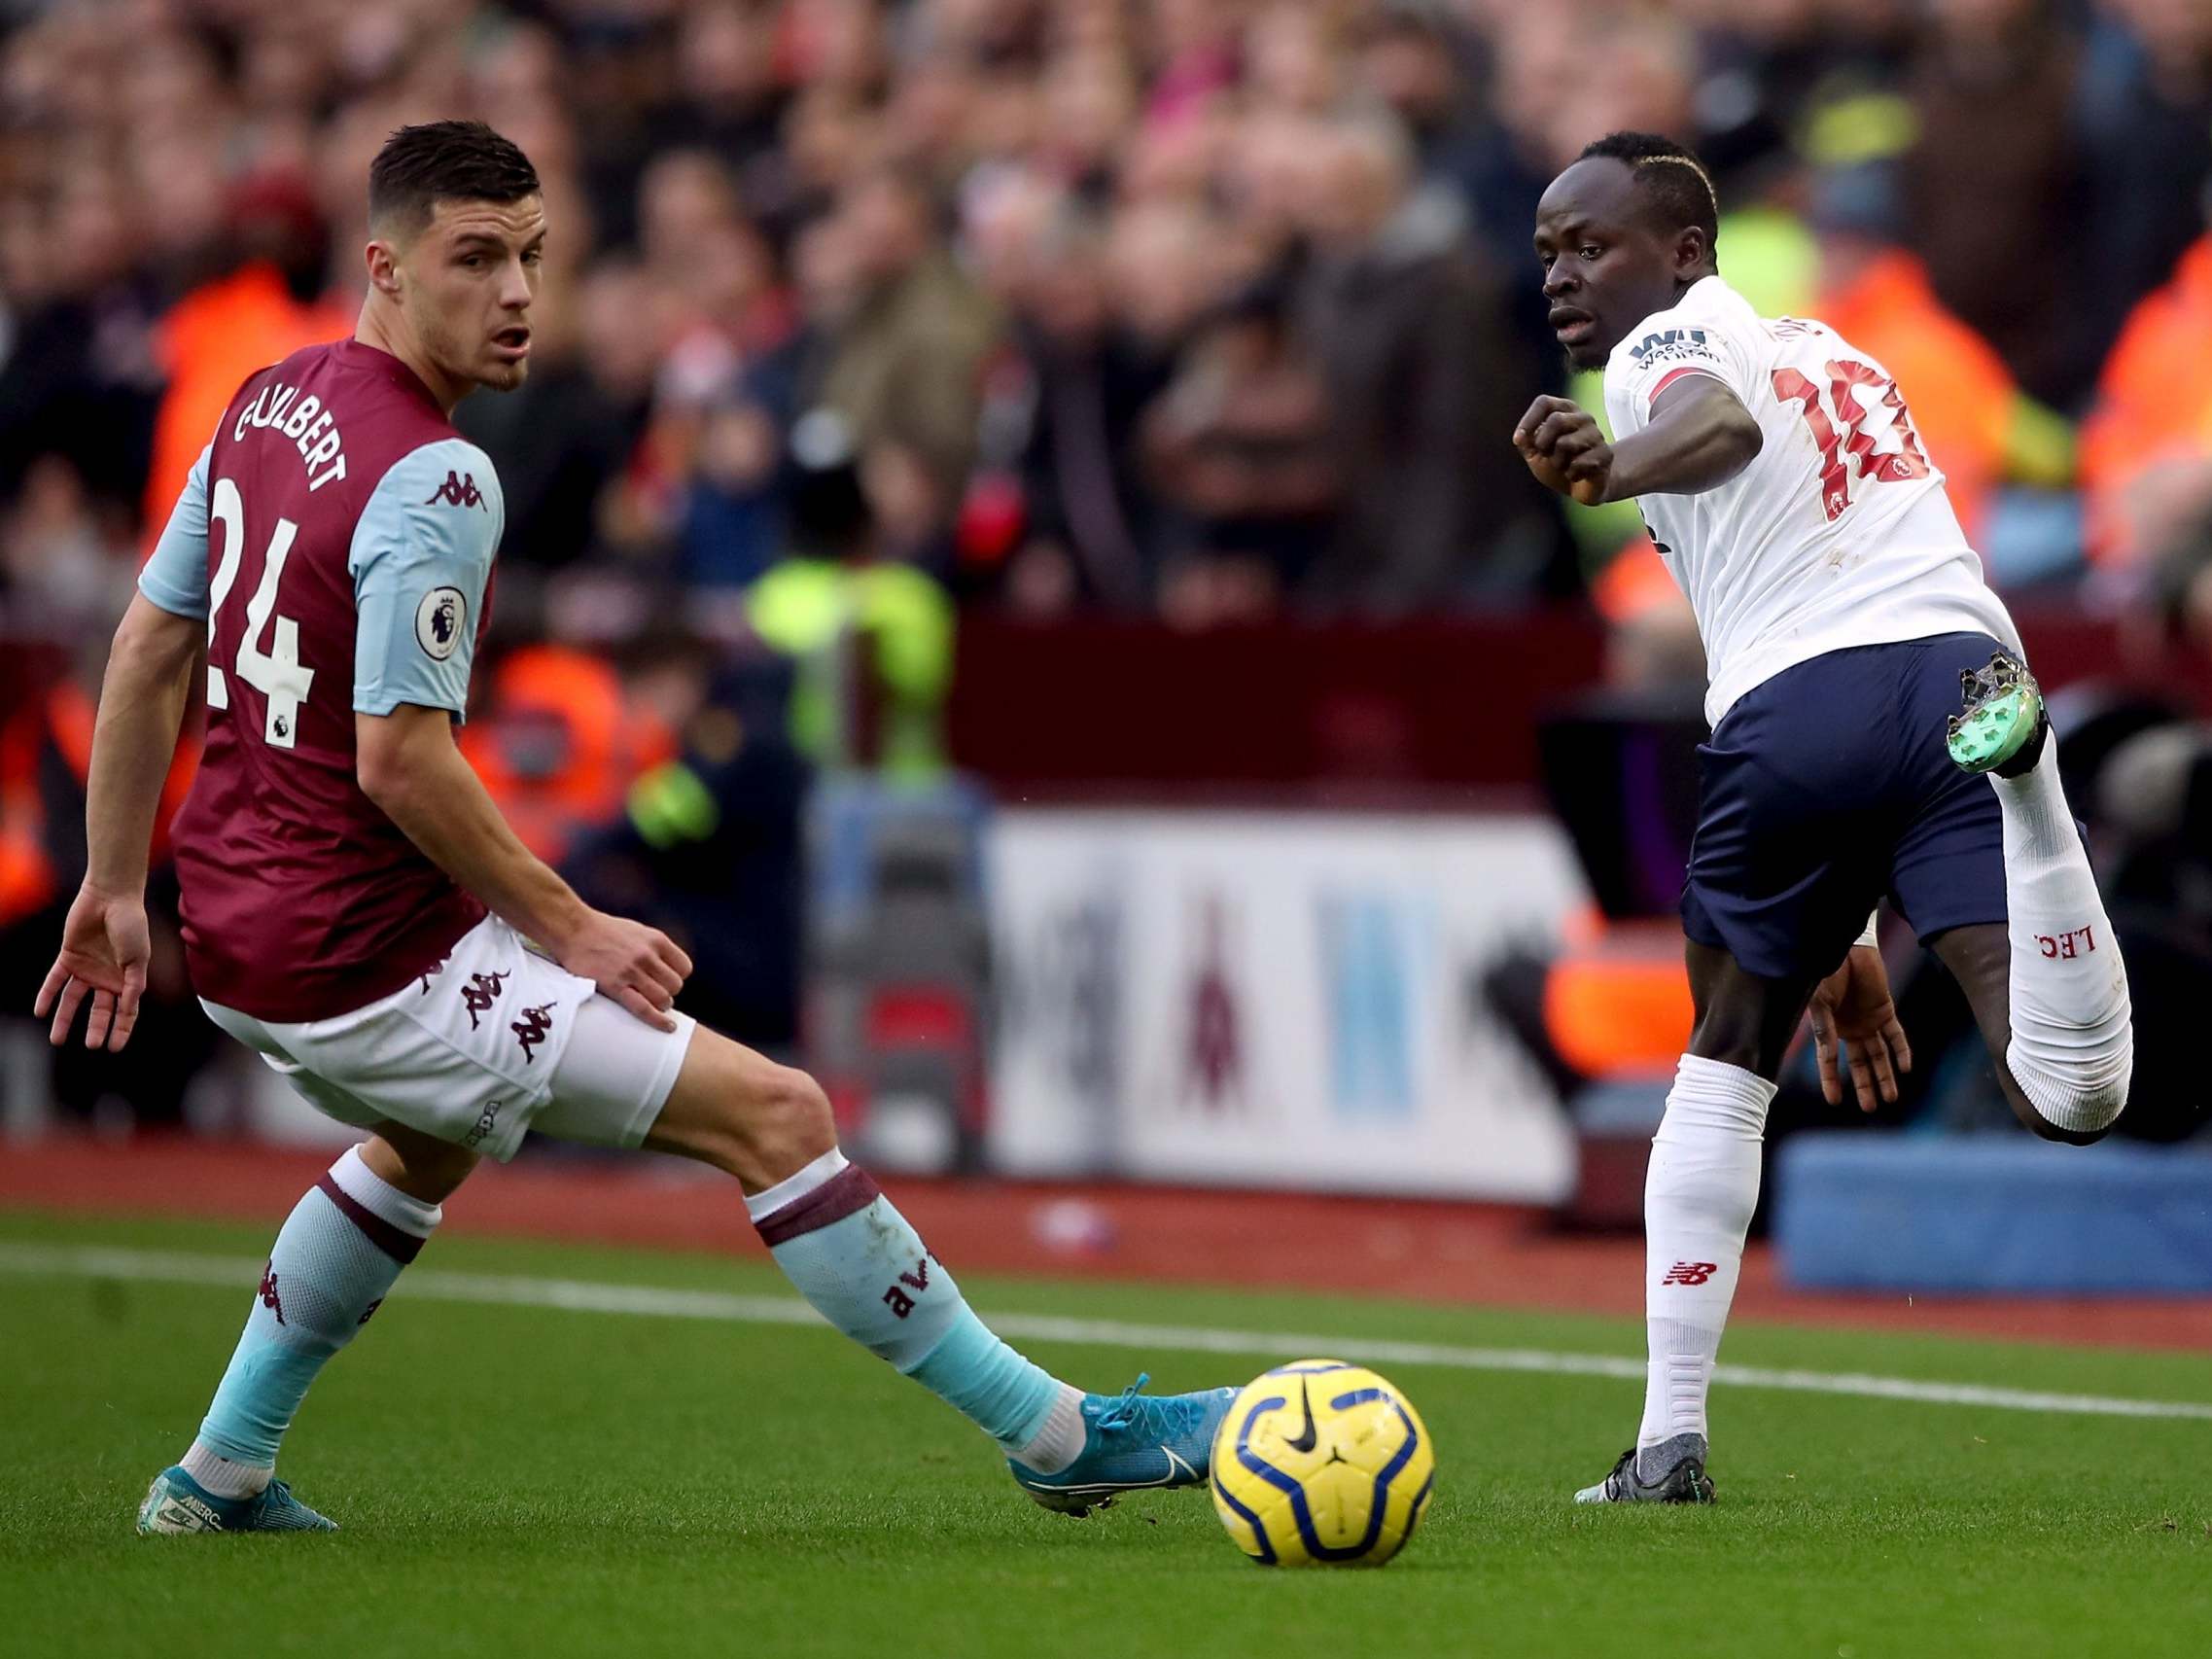 Aston Villa vs Liverpool LIVE: Stream, score, goals and latest updates | The Independent